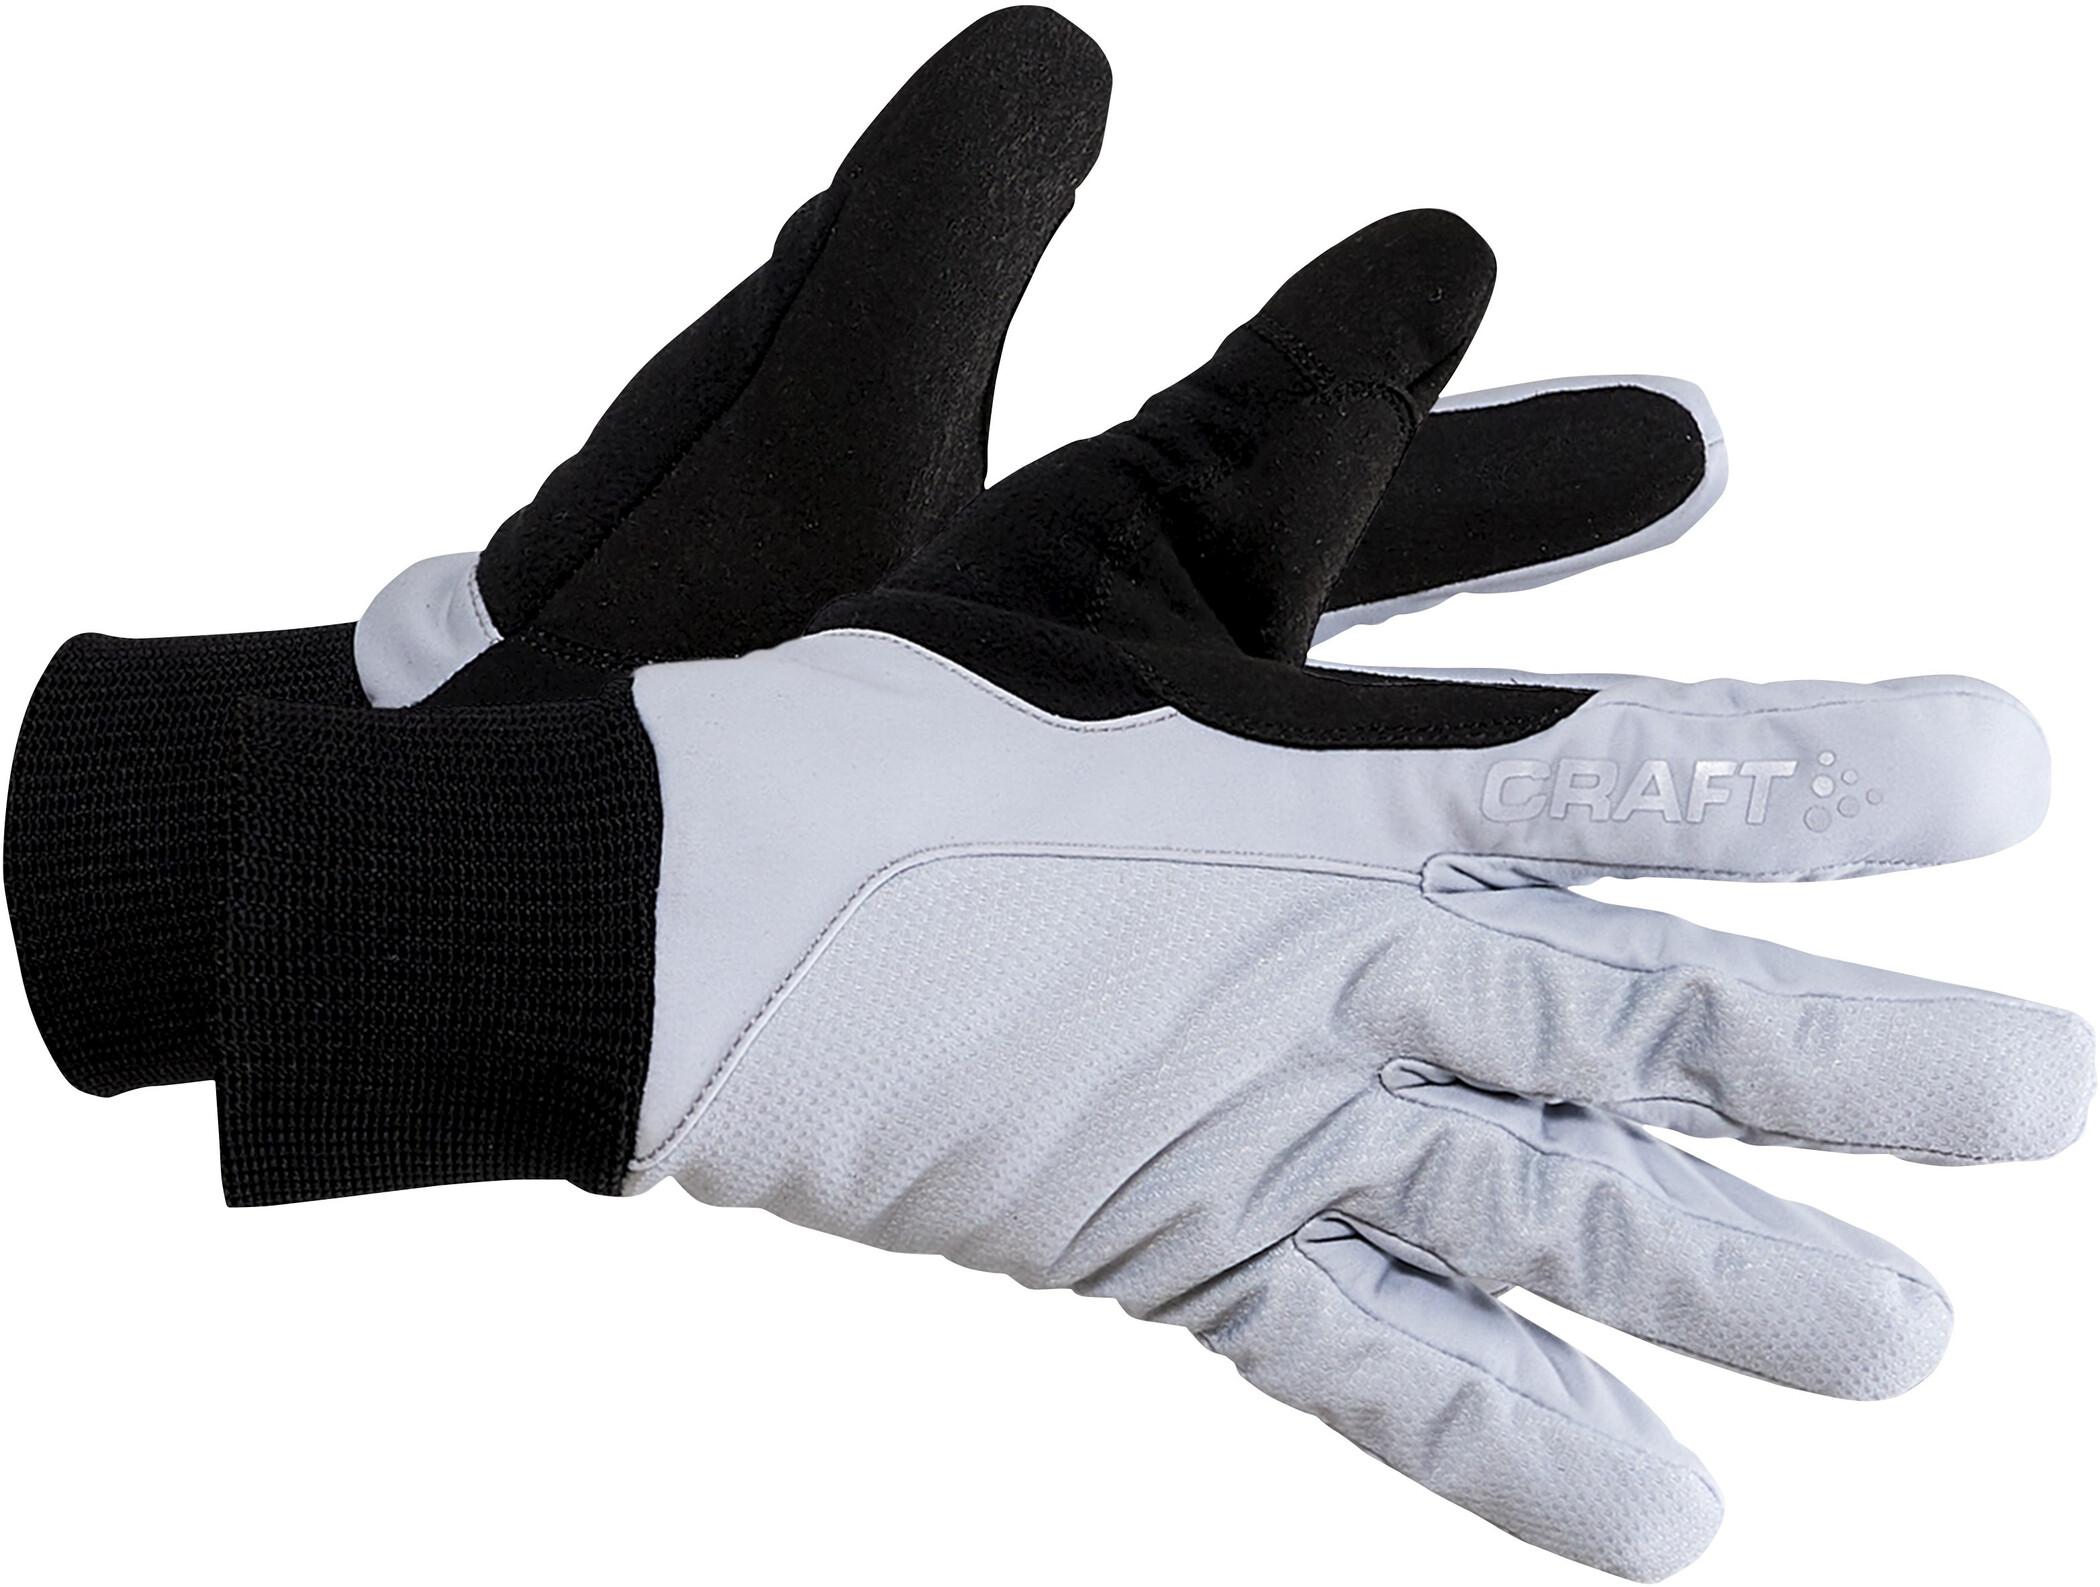 Craft Core Insulate Handschuhe ash/Black 2020 Outdoor Handschuhe 